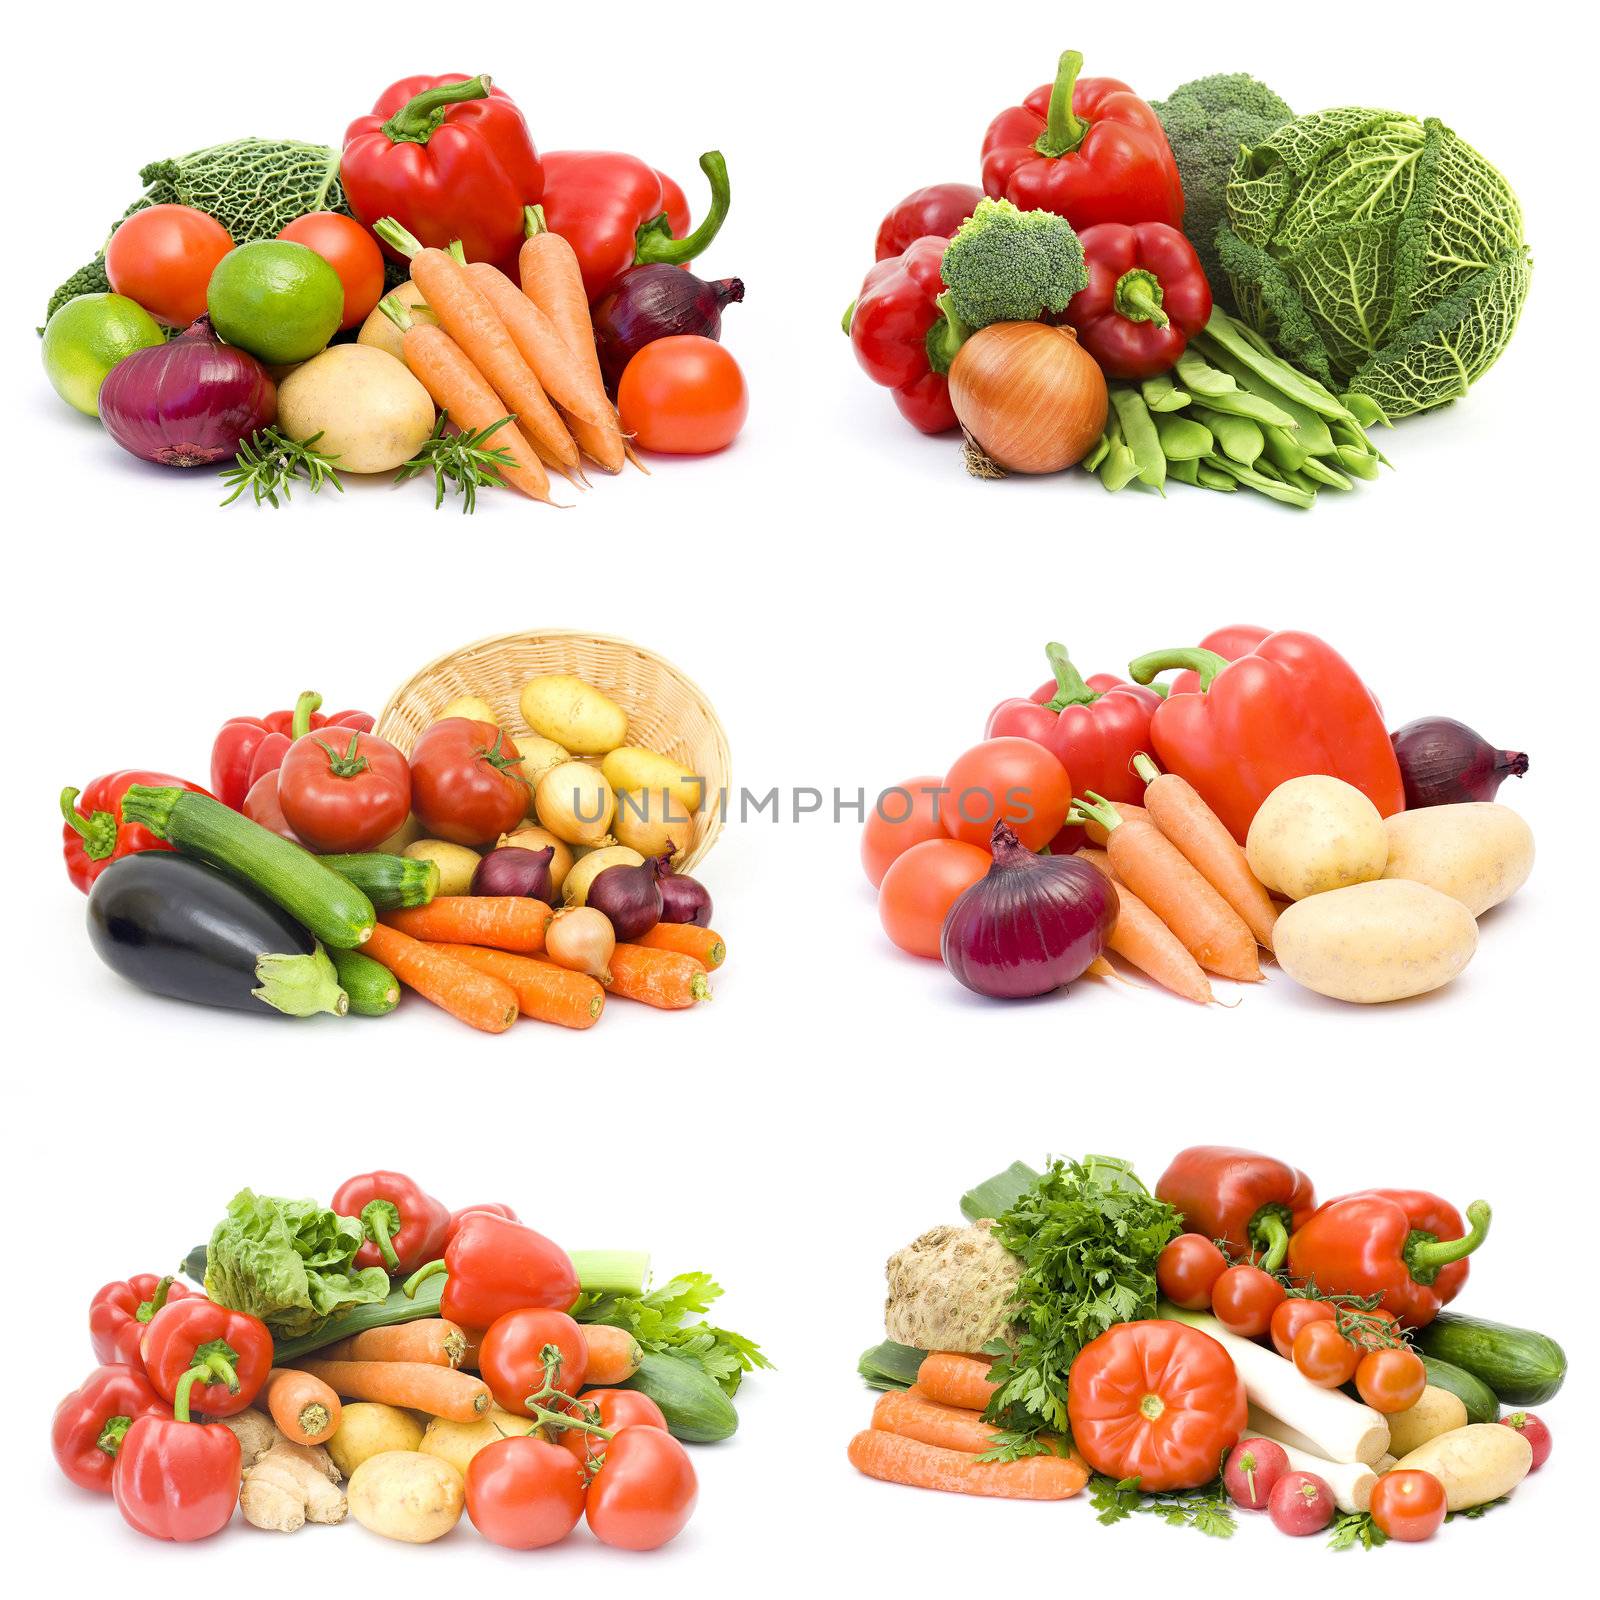 fresh vegetables  - collage by miradrozdowski